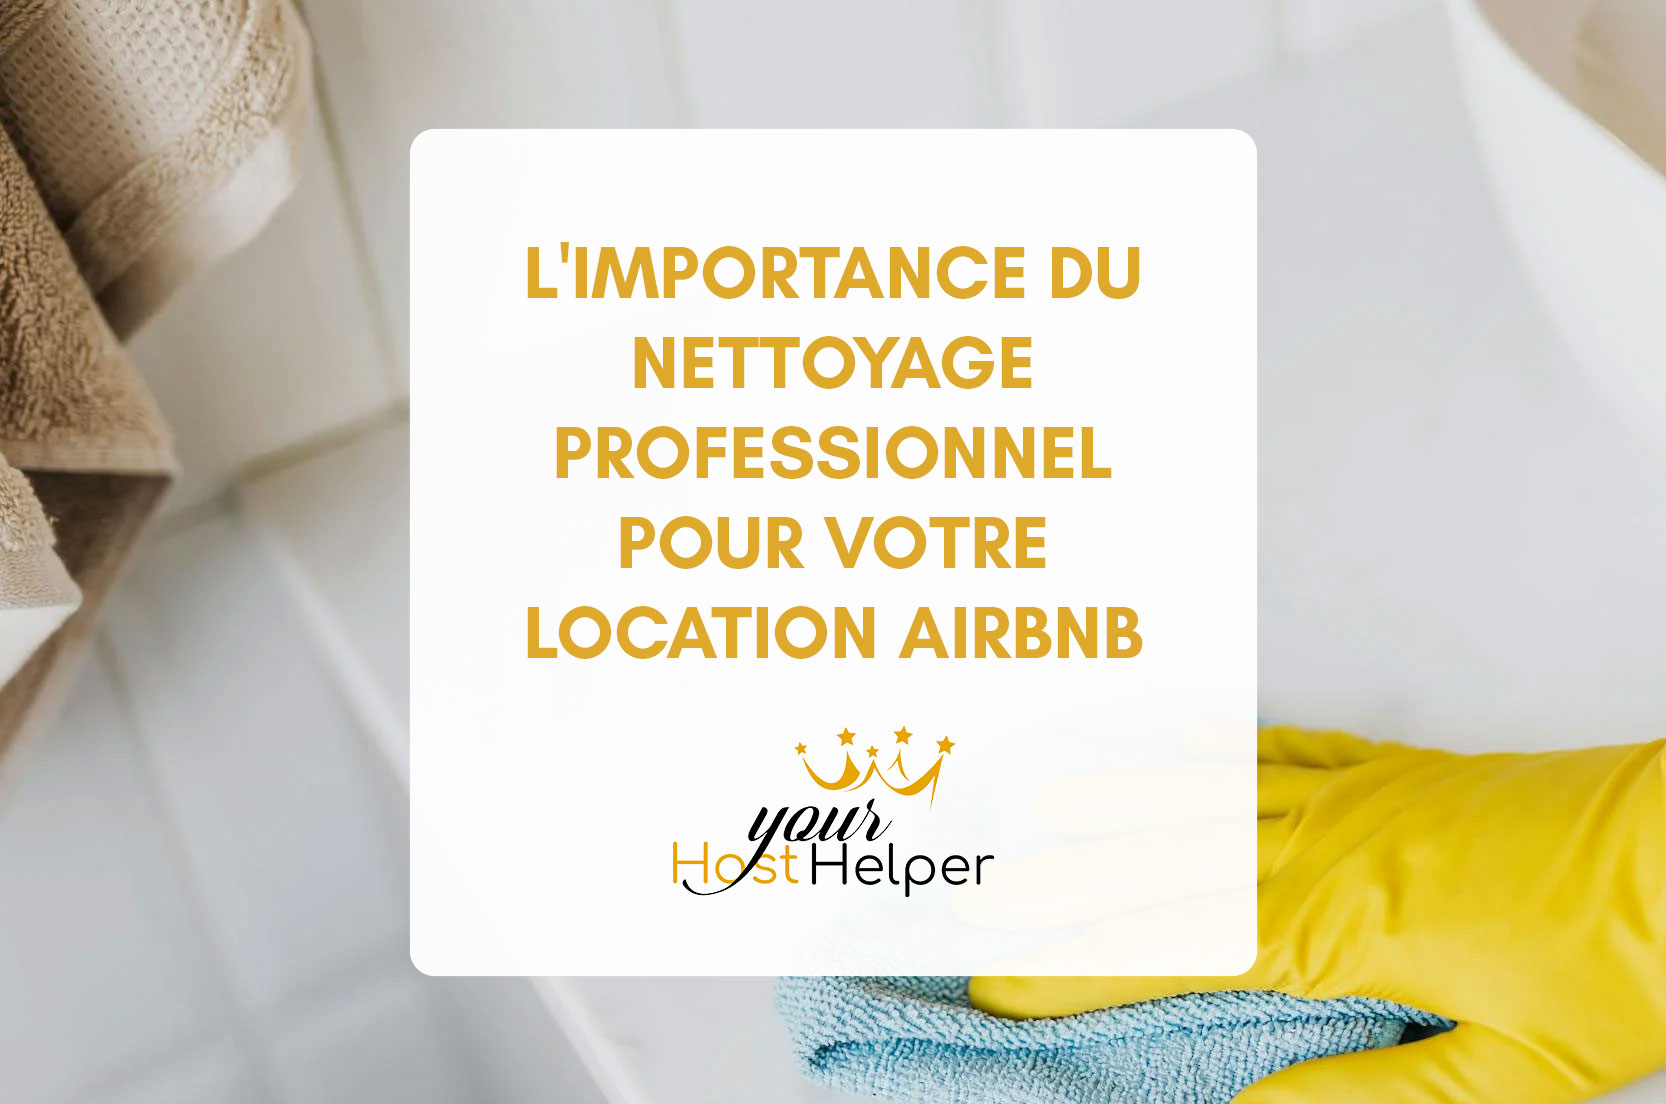 You are currently viewing L’importance du nettoyage professionnel pour votre location Airbnb